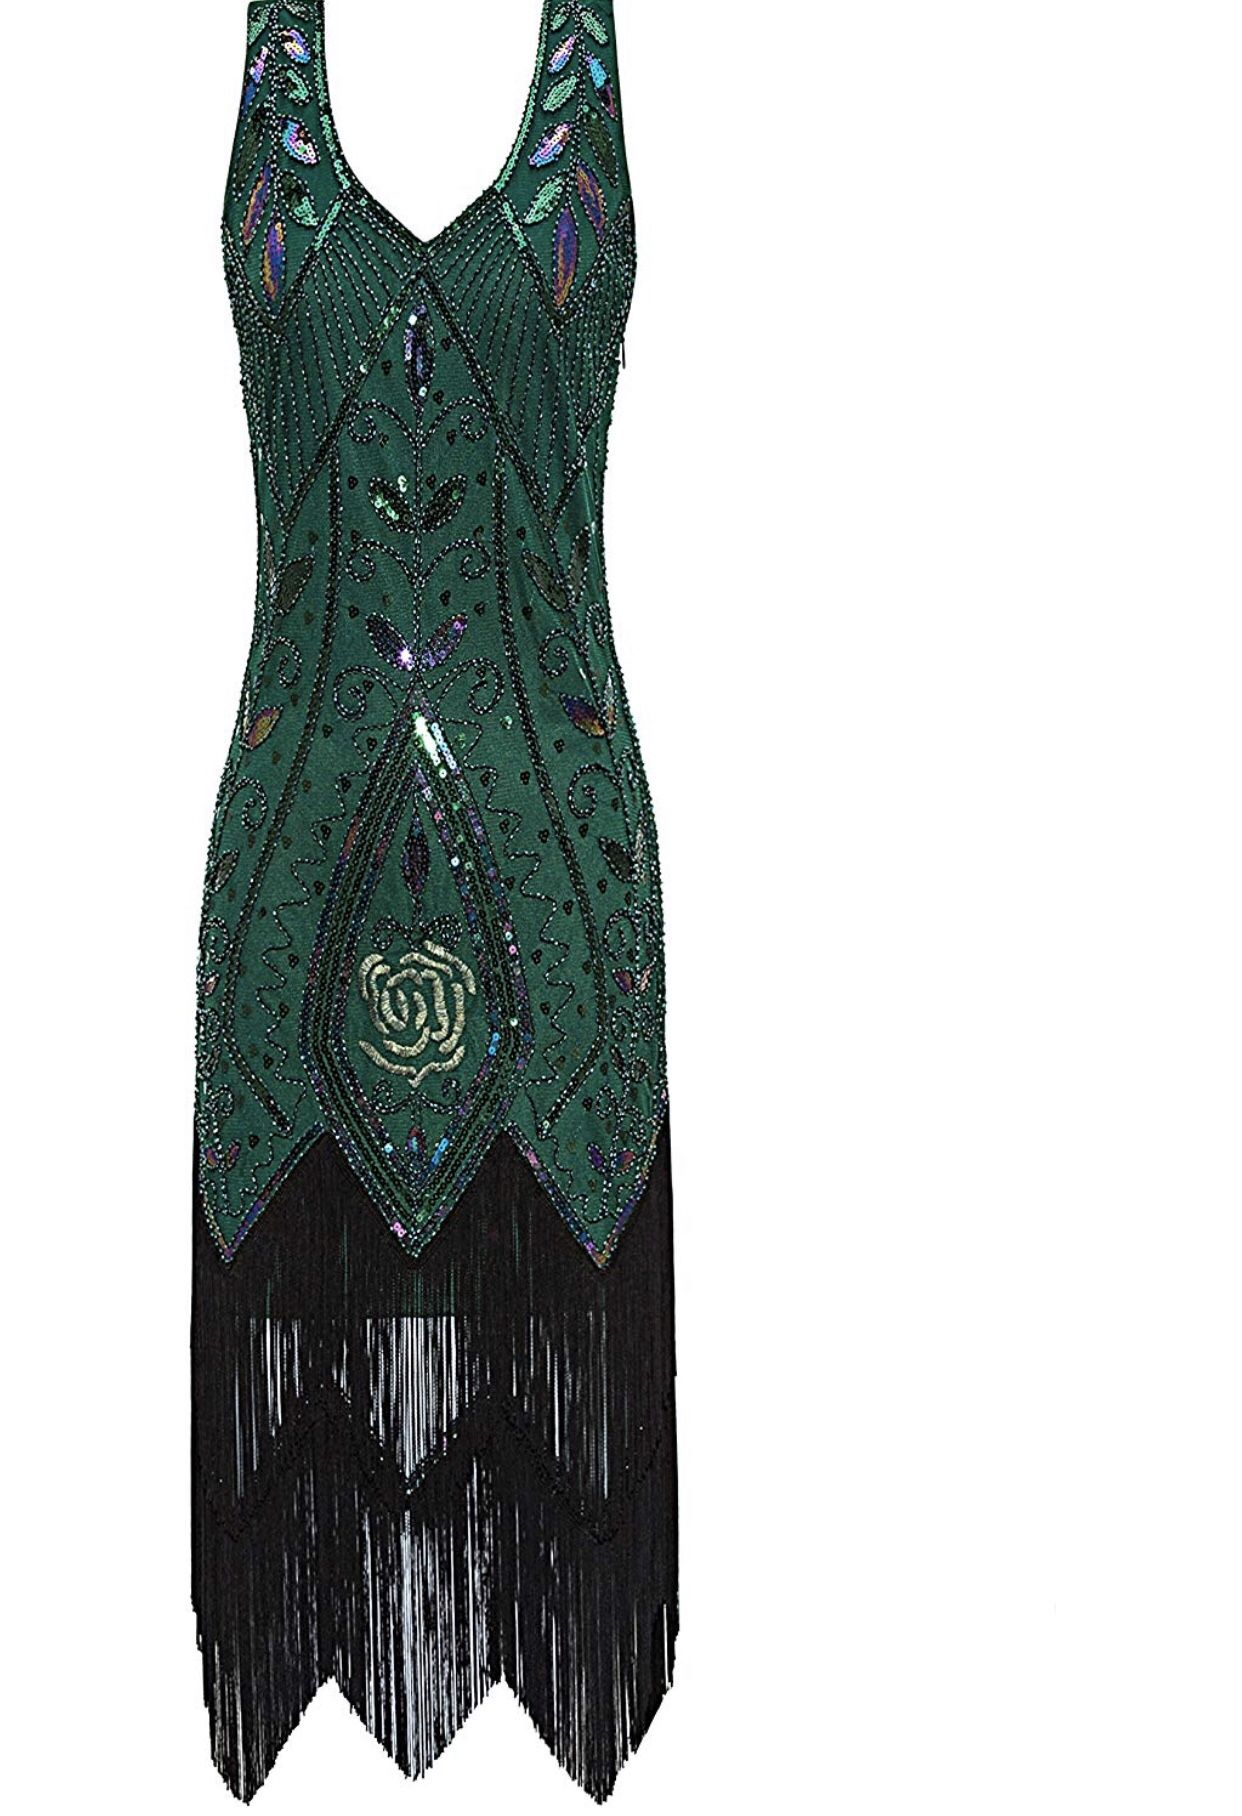 Size S Women’s 1920s Vintage Flapper Fringe Beaded Great Gatsby Party Dress